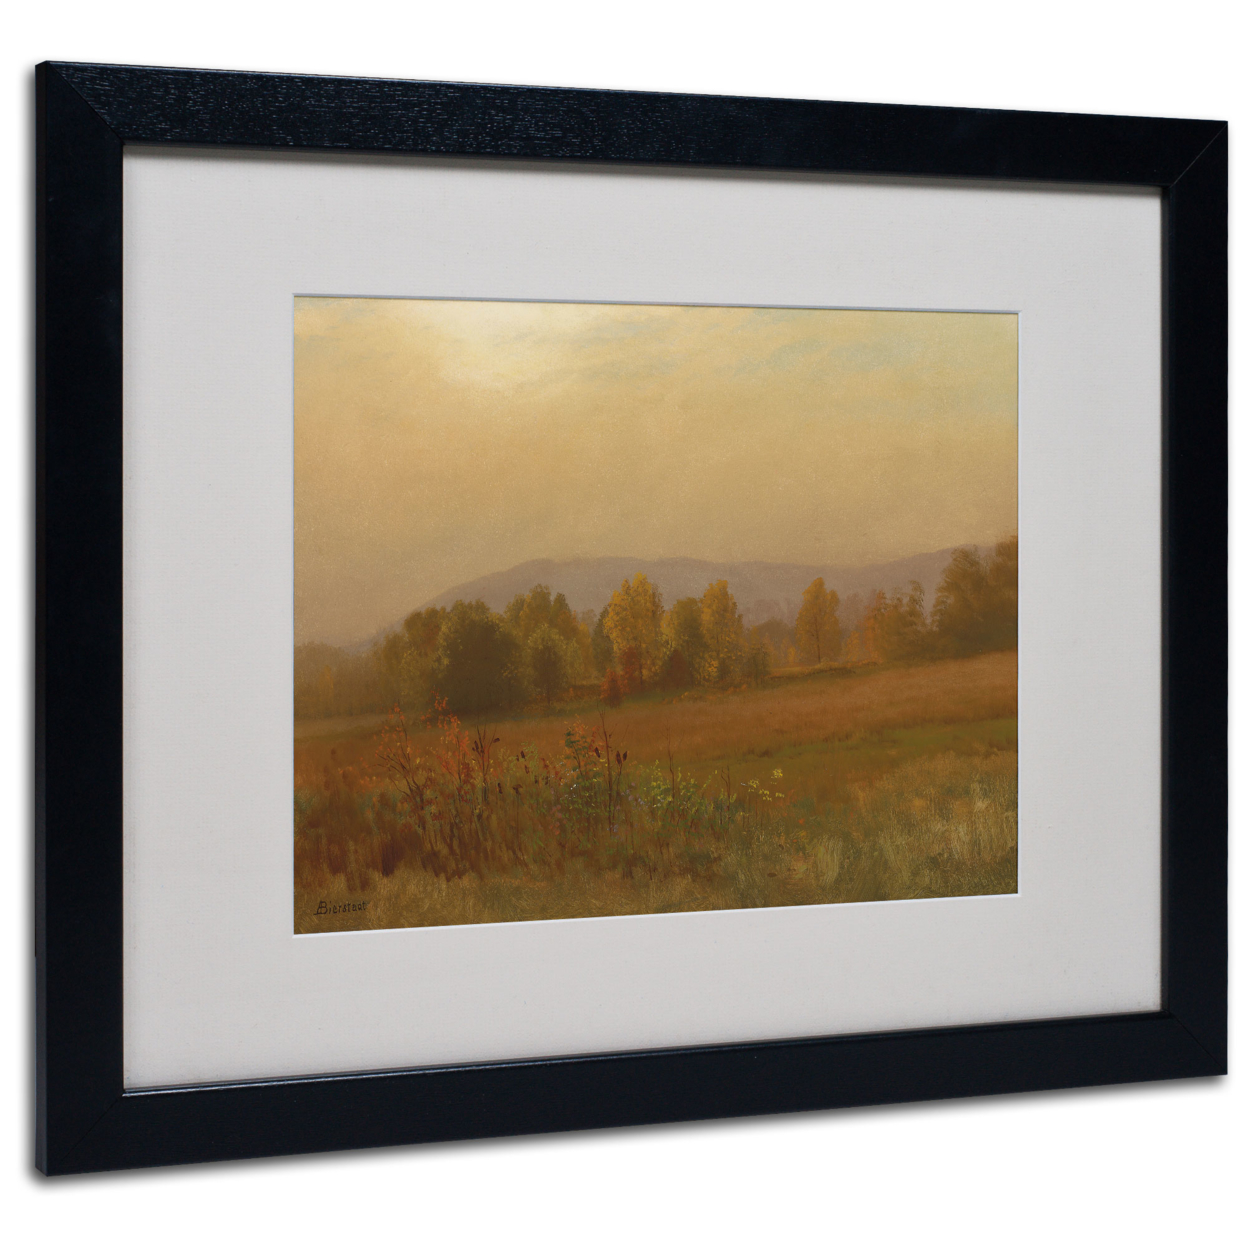 Albert Bierstadt 'Autumn Landscape' Black Wooden Framed Art 18 X 22 Inches